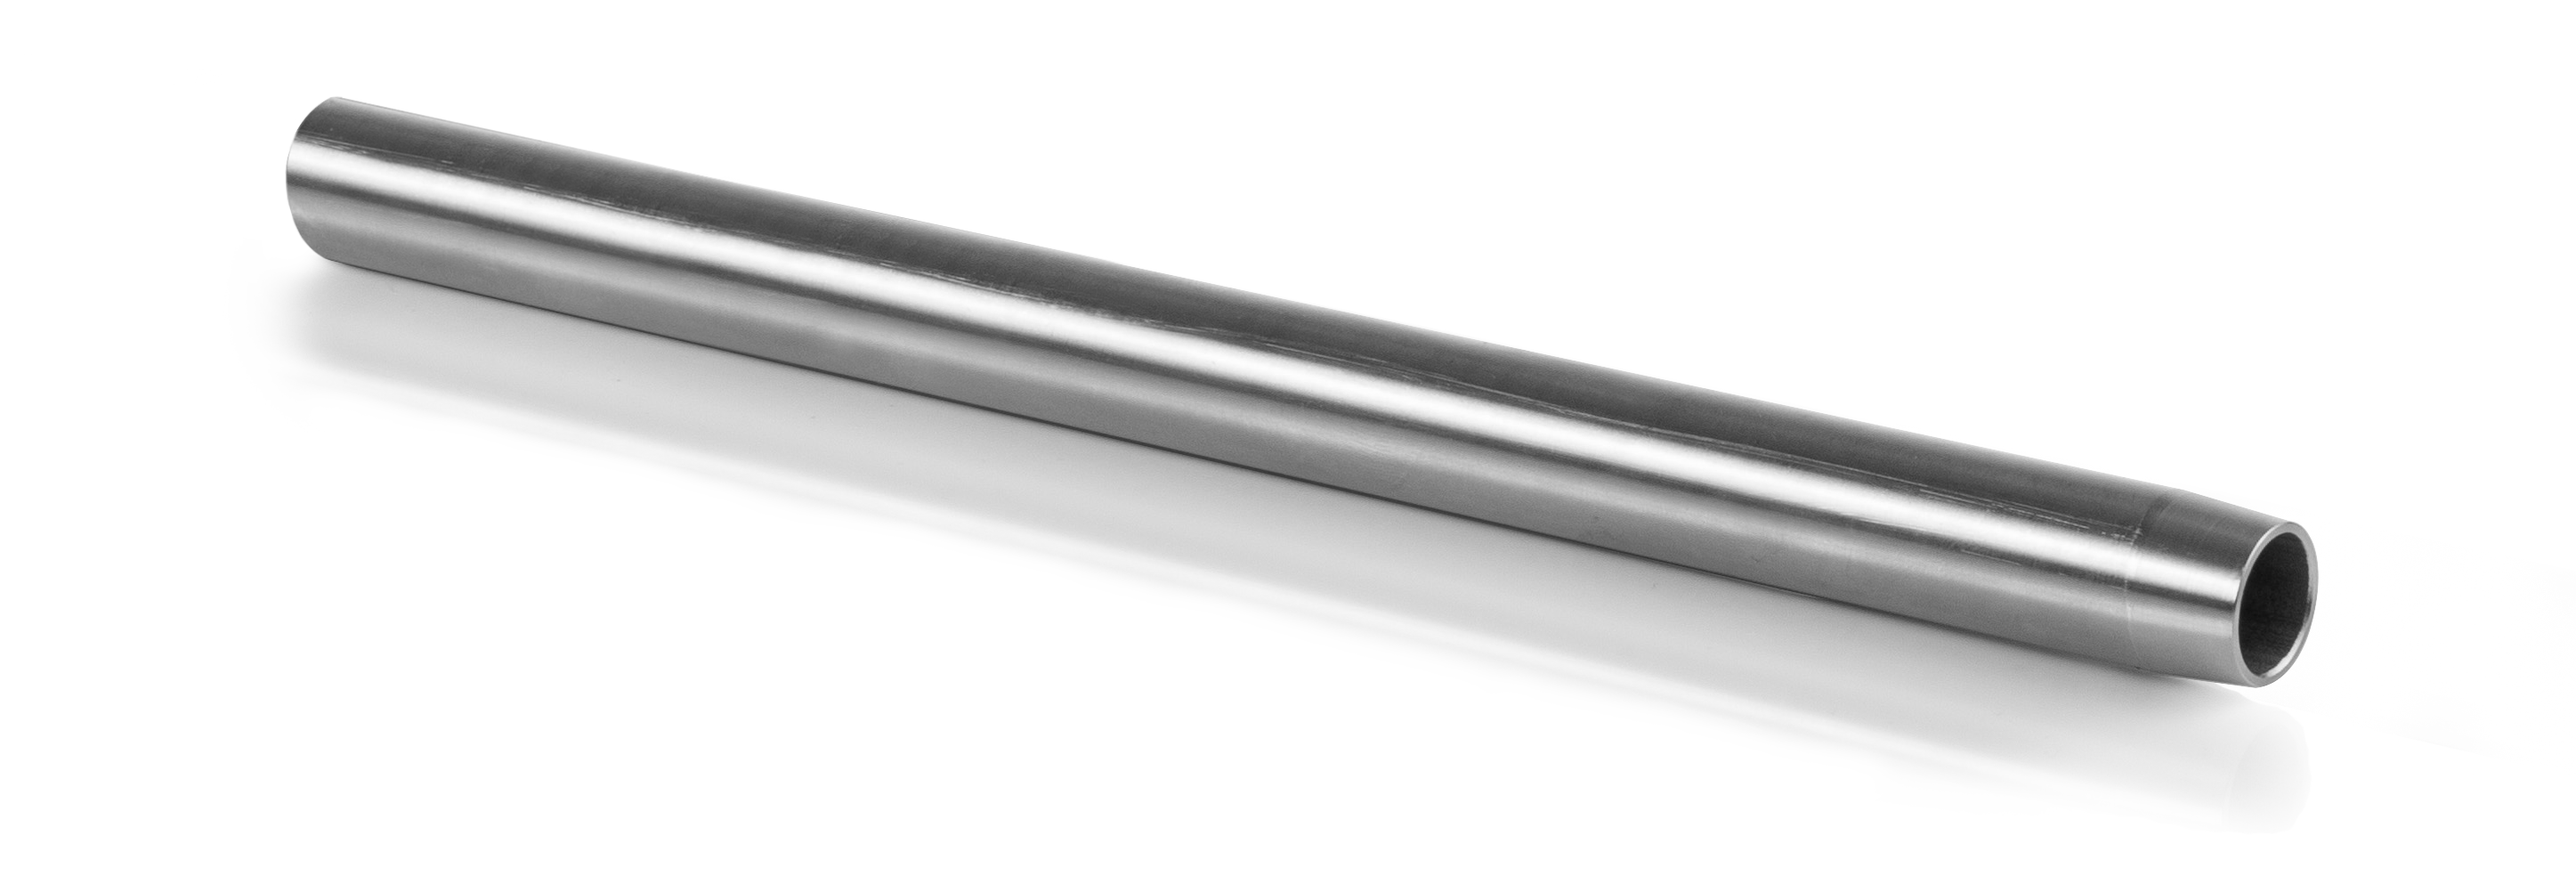 8 in. Stainless Steel 19 mm Rod (Tilta)